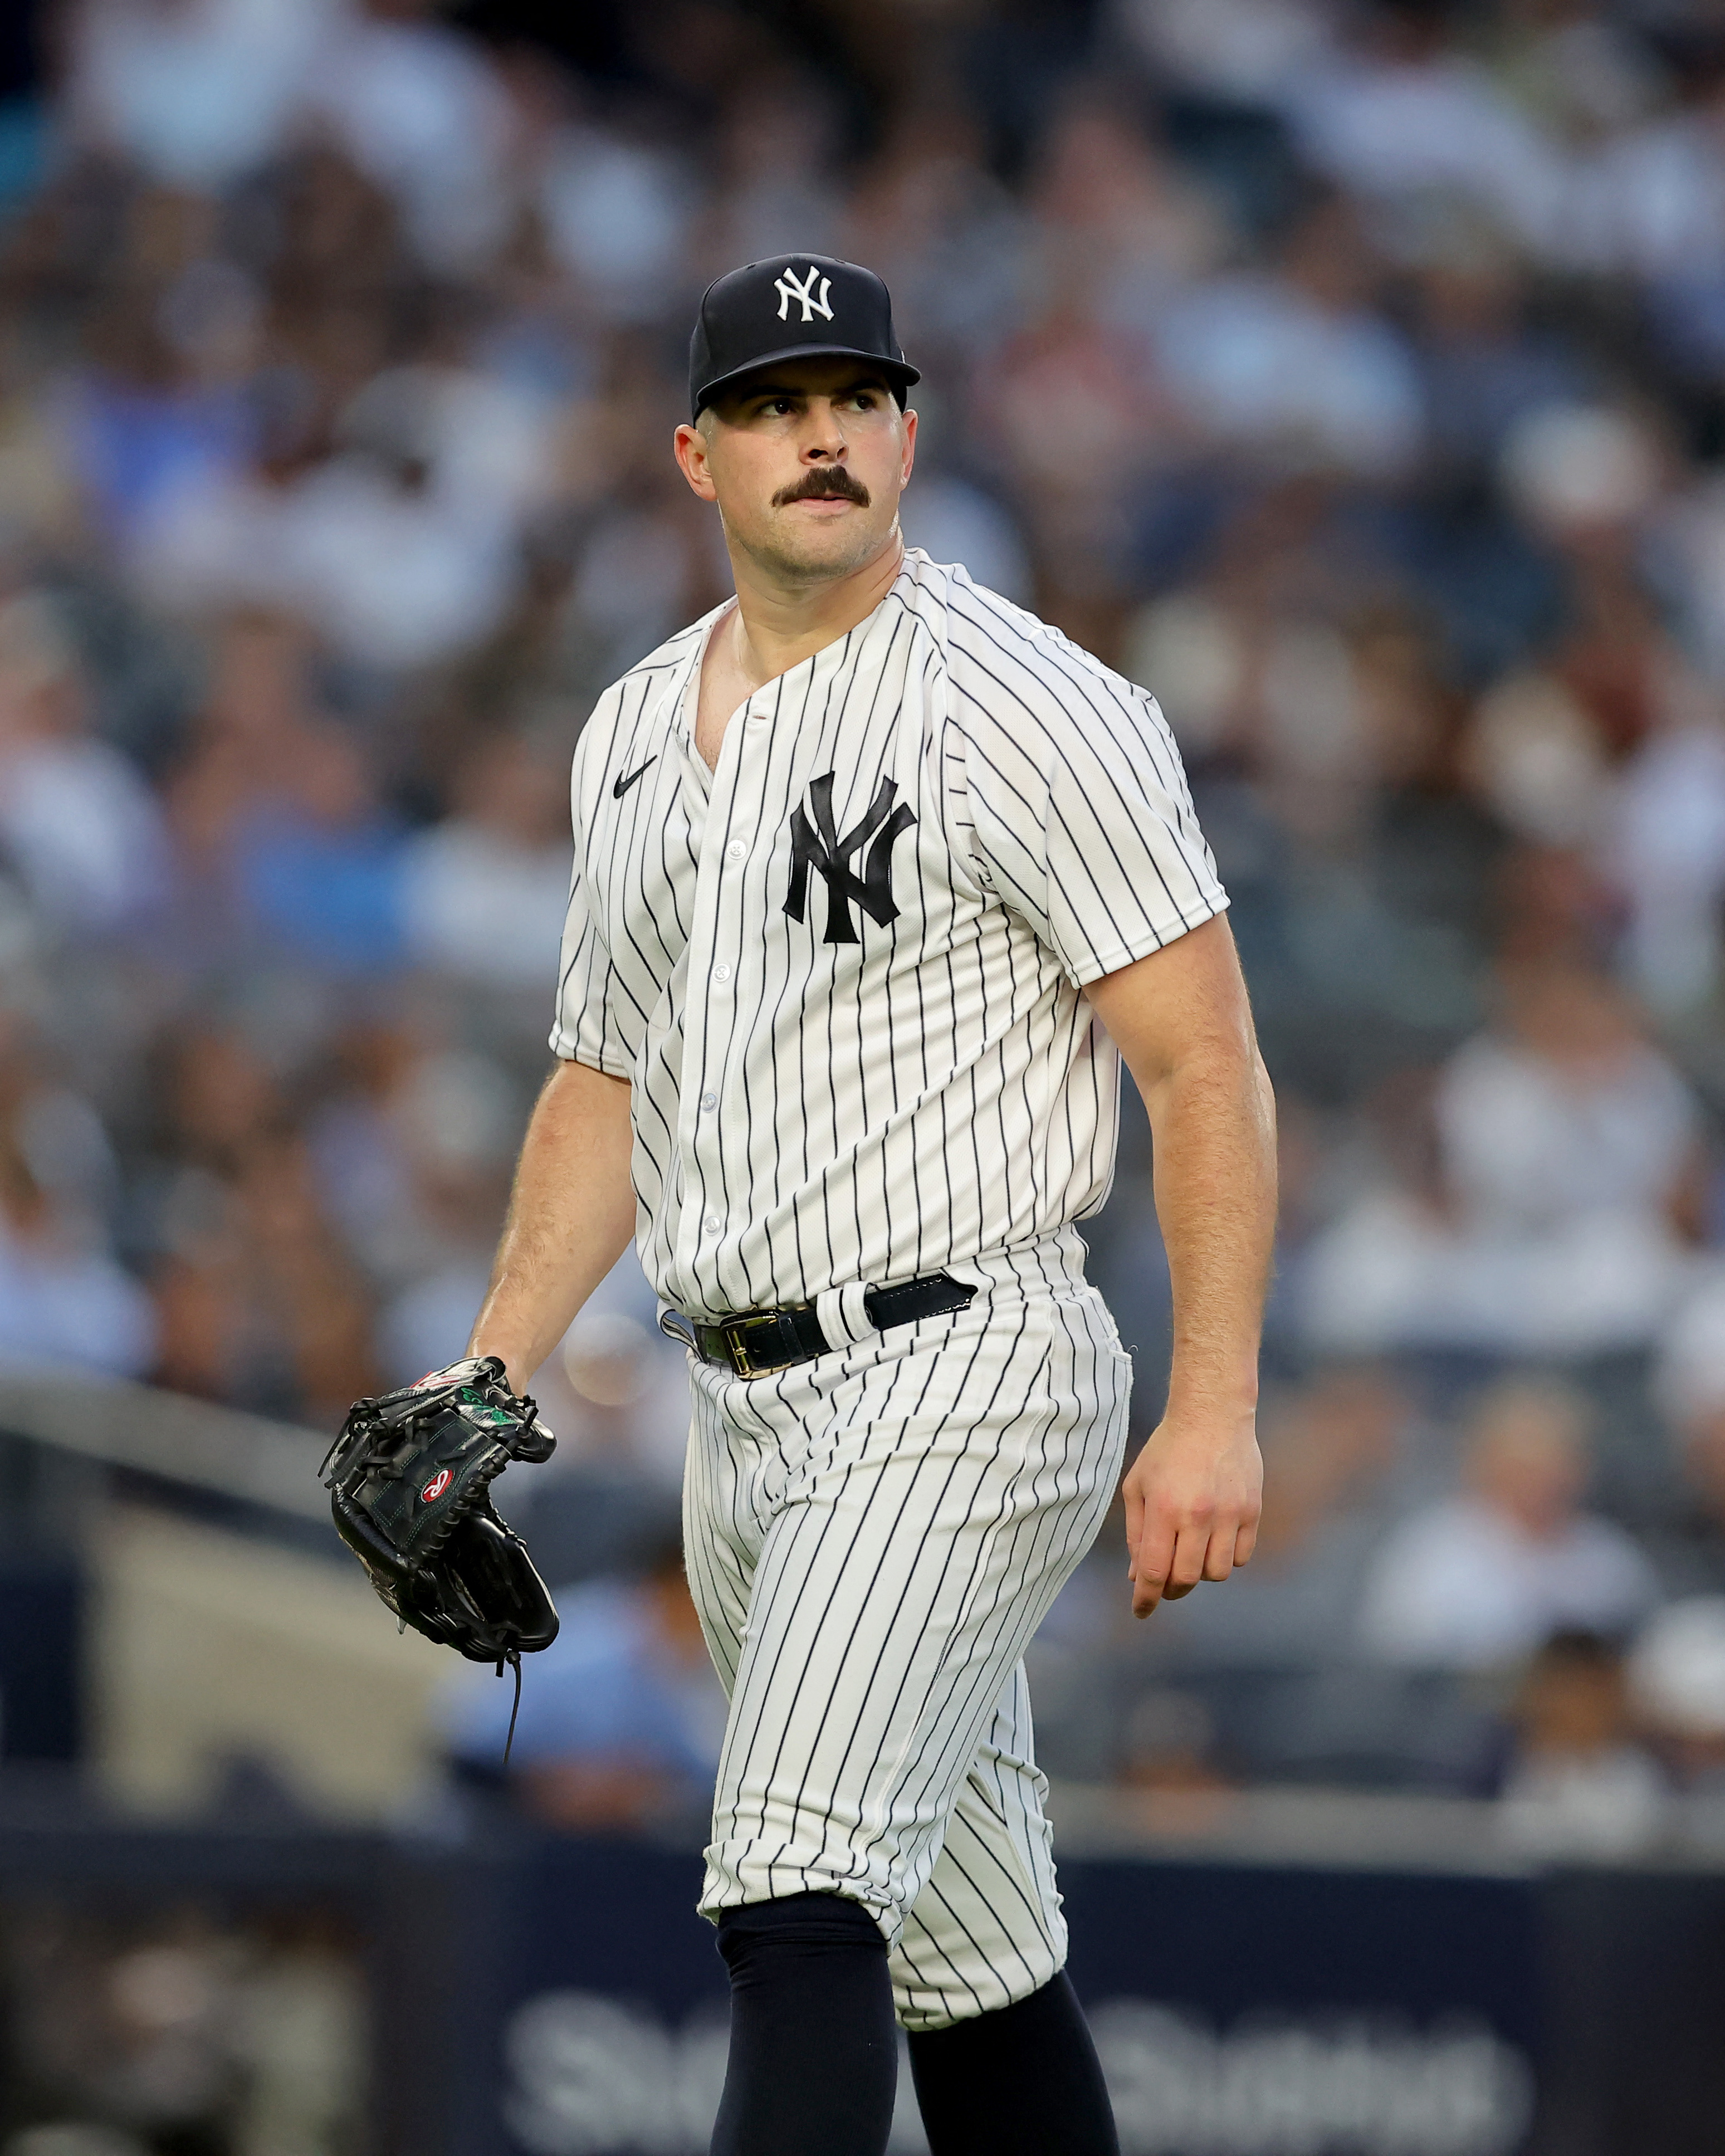 Zach Eflin, Rays shut down slumping Yankees